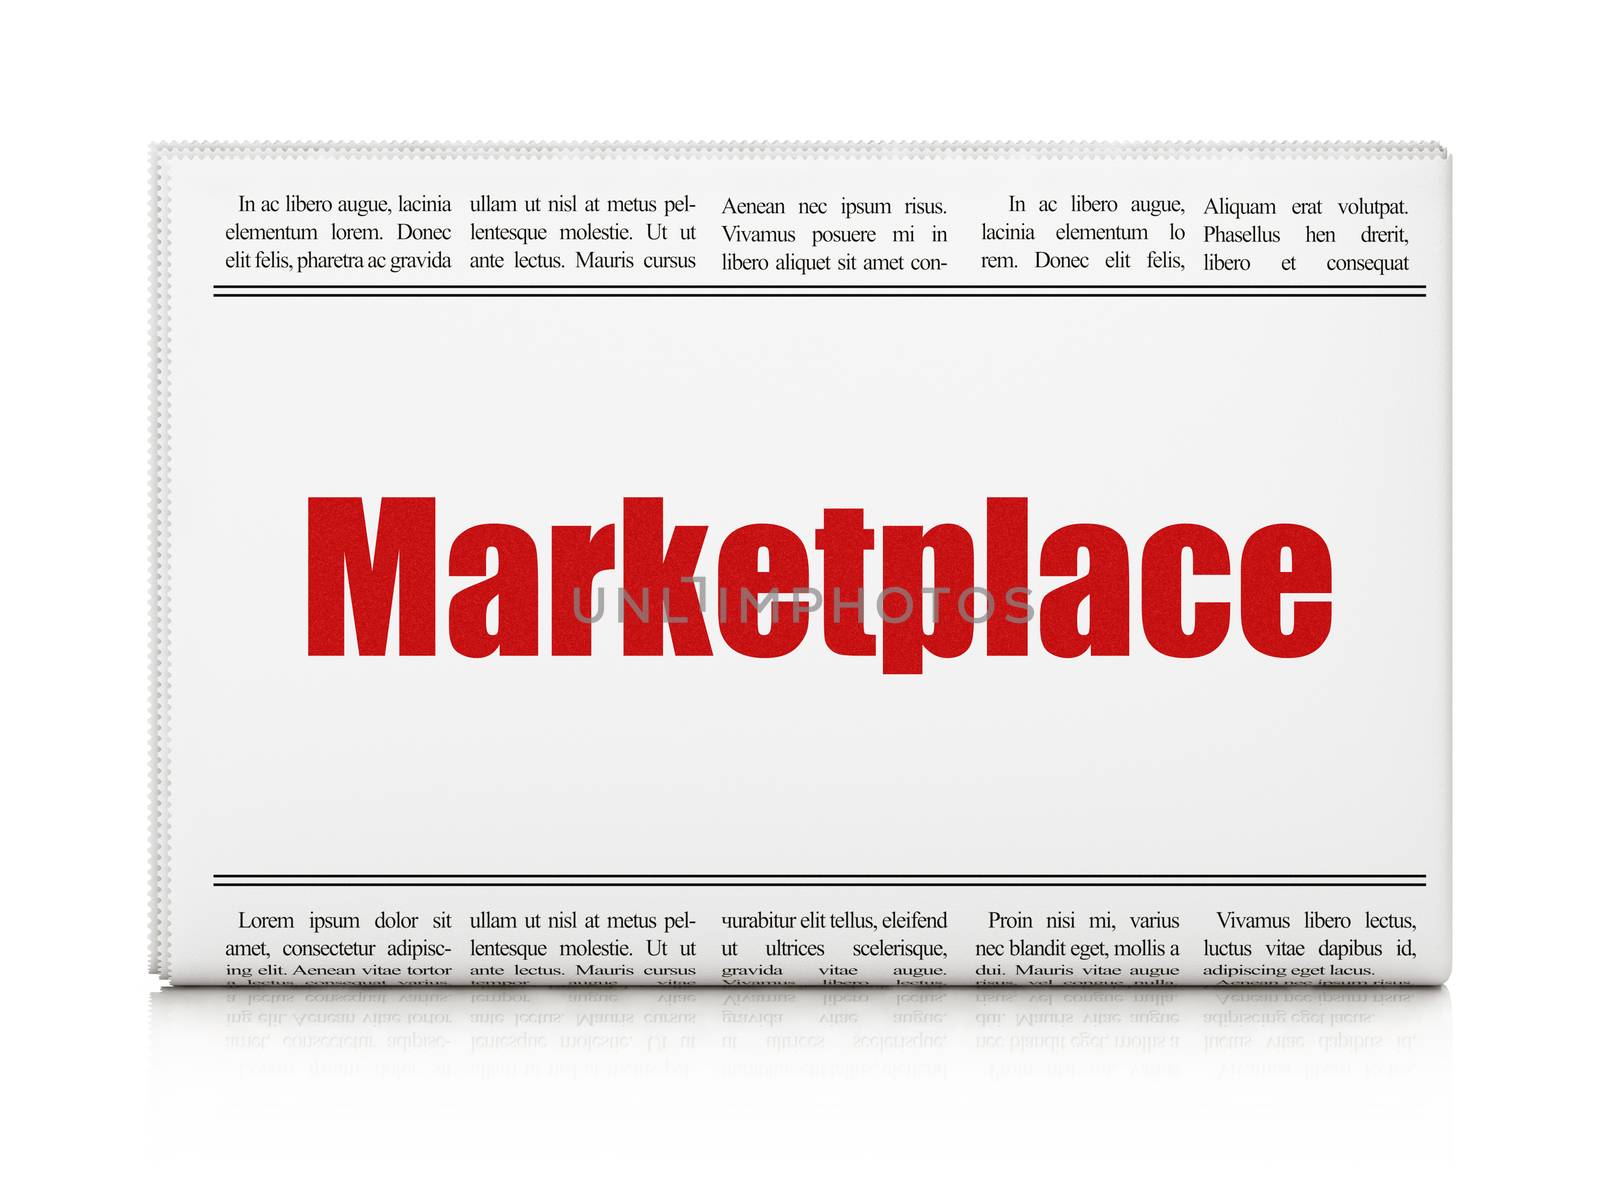 Marketing concept: newspaper headline Marketplace on White background, 3d render